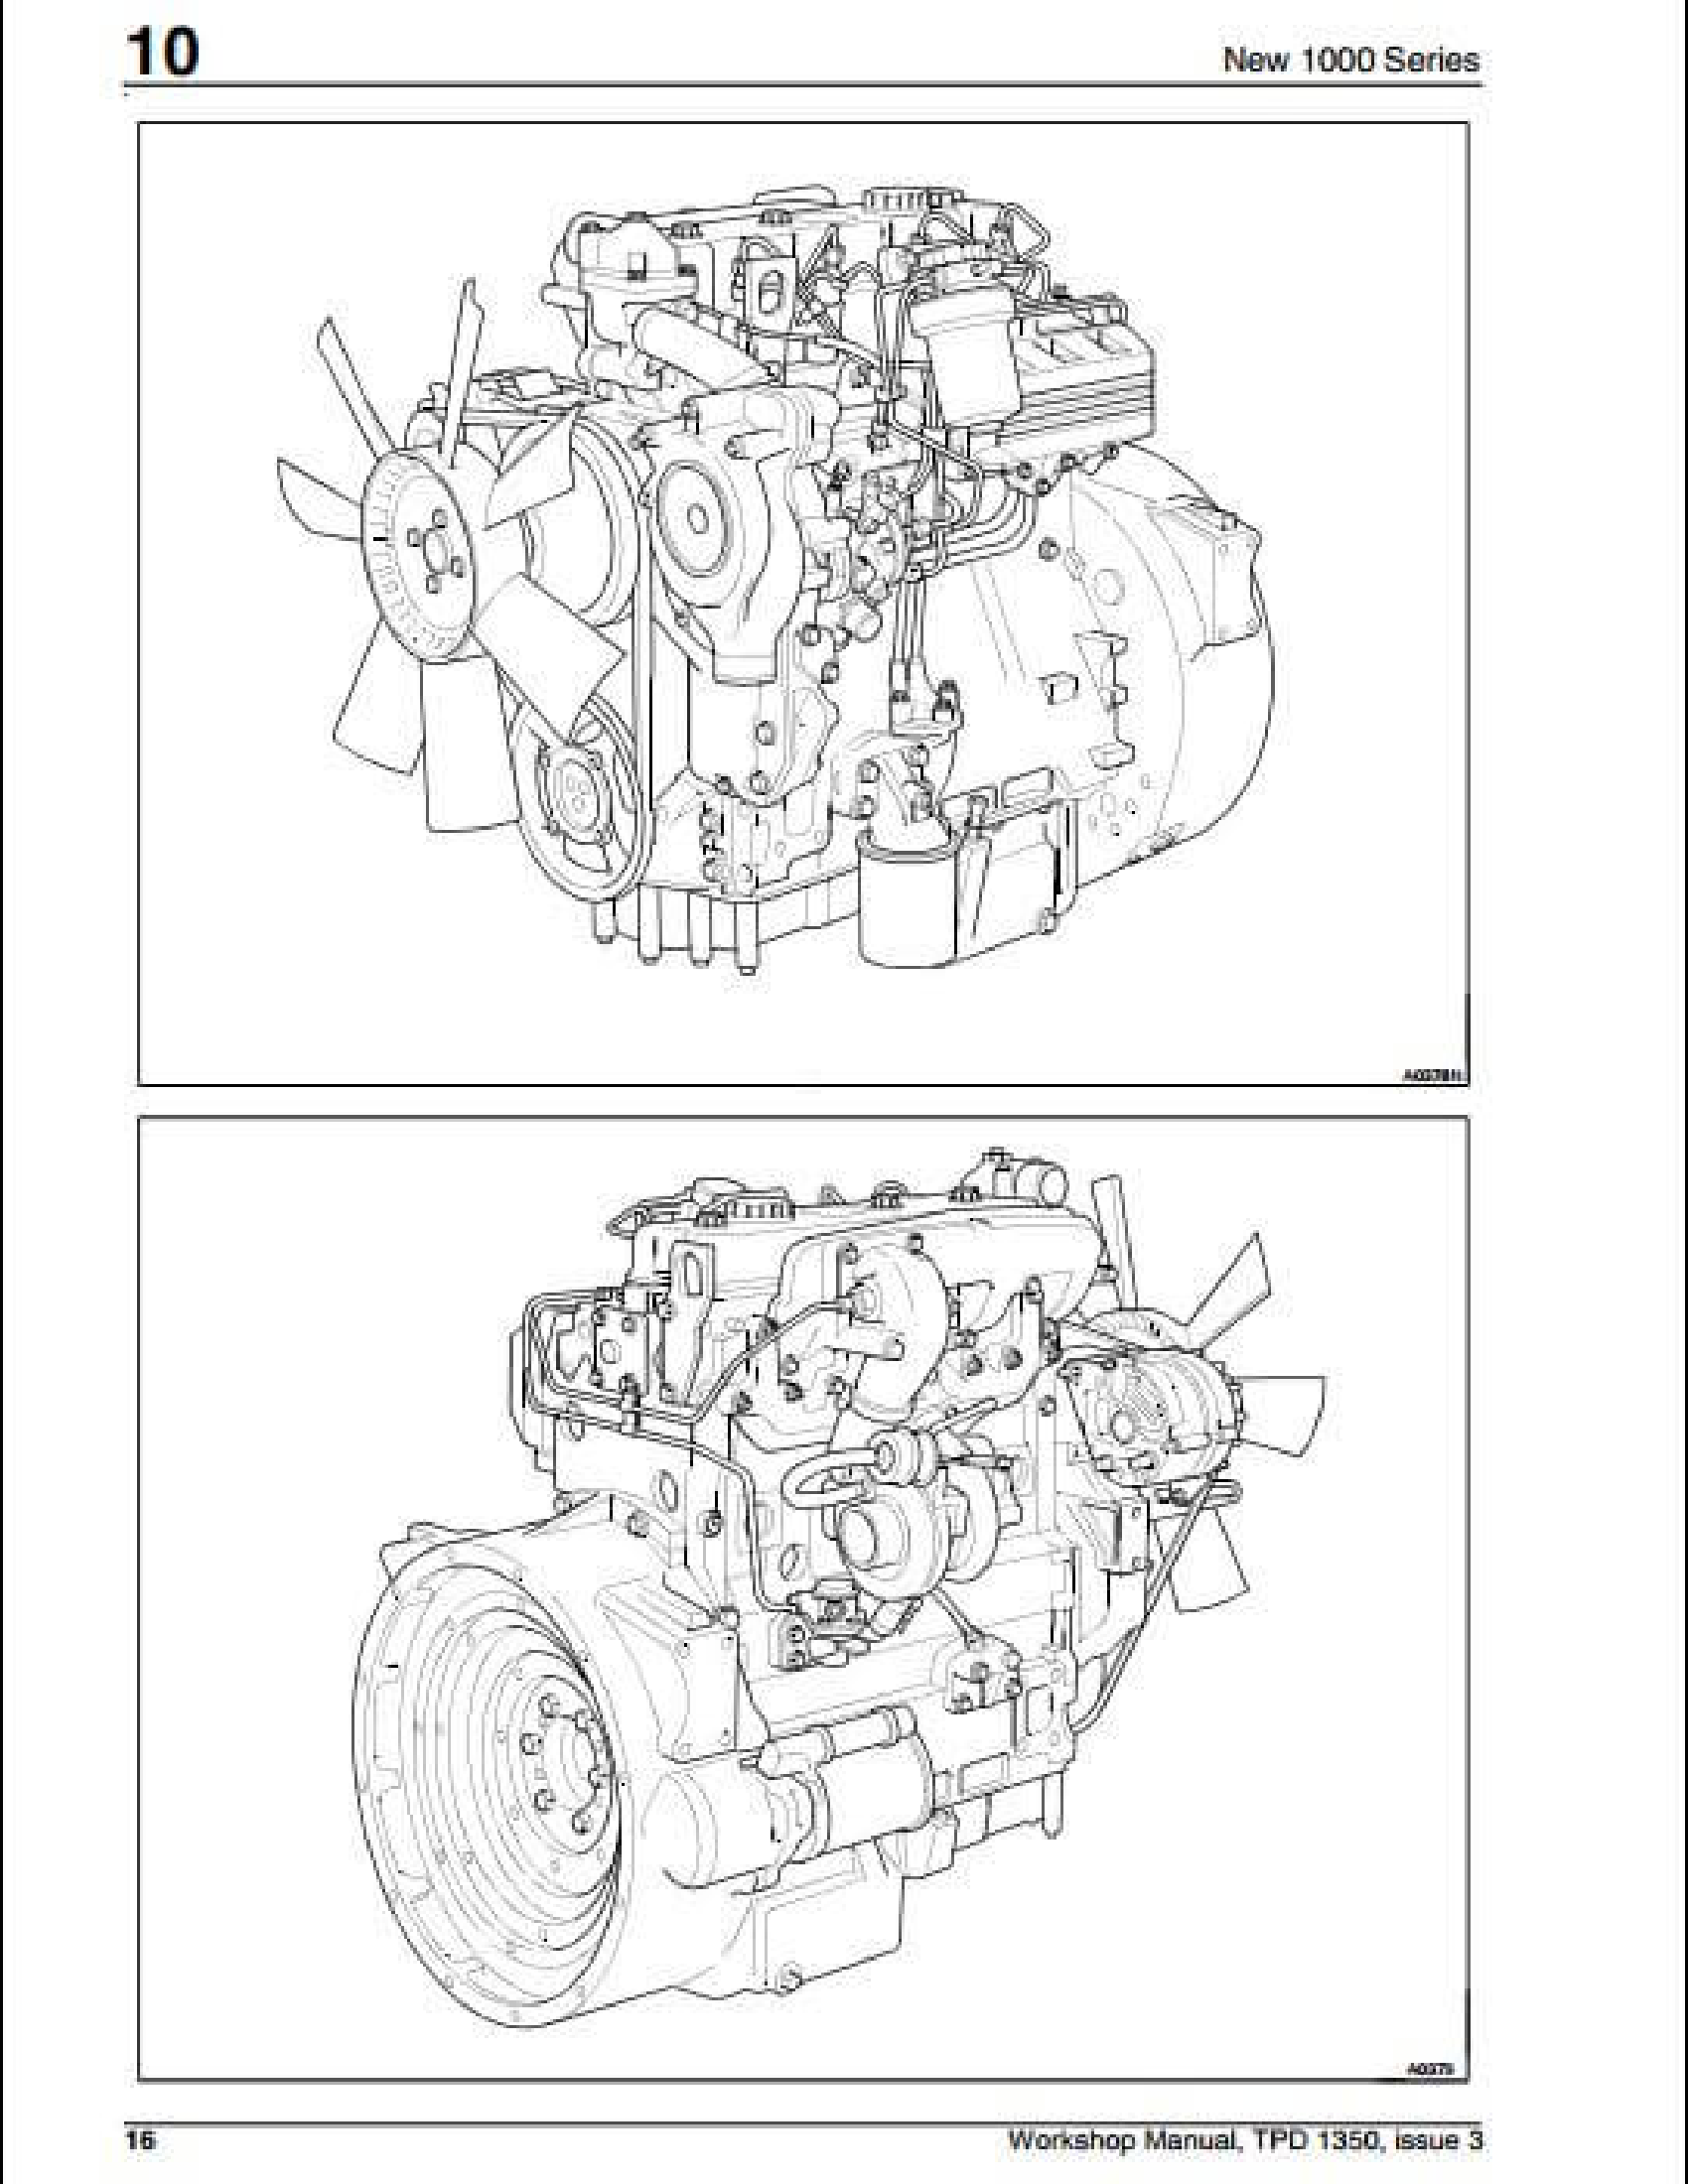 Perkins 1000 New Series Engine manual